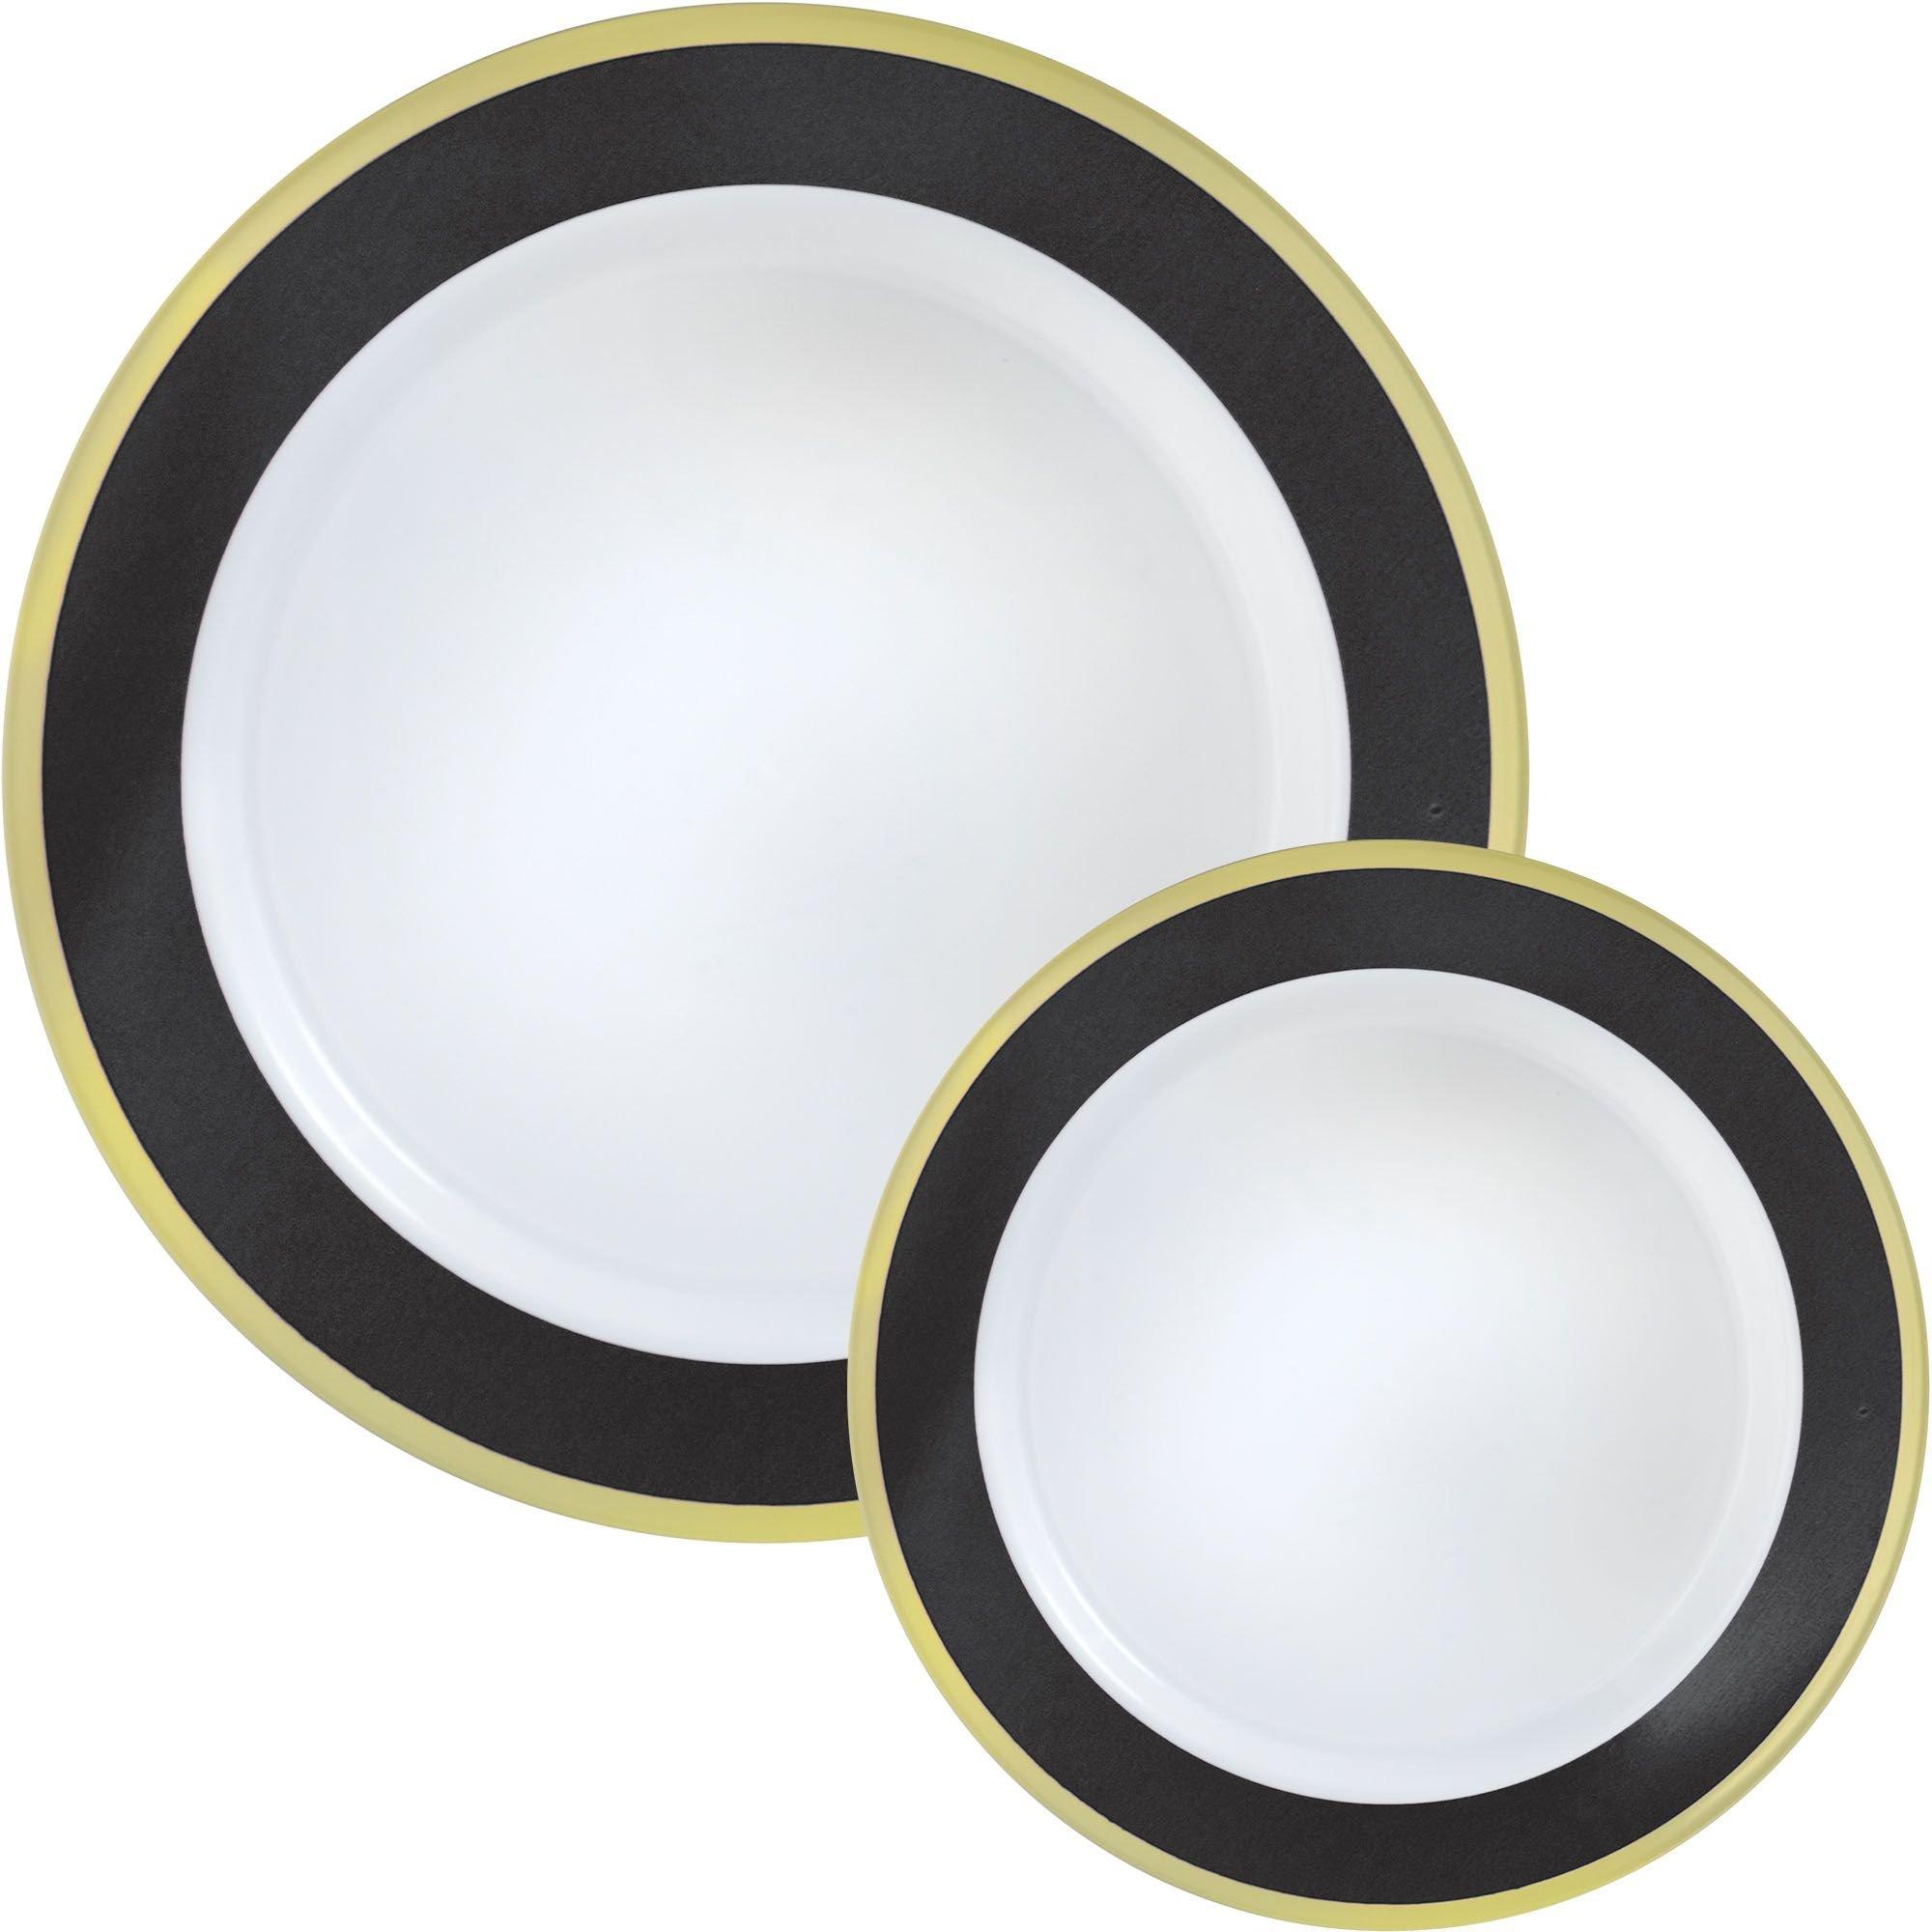 Premium Black & White Plastic Dinner Plates with Gold Border - 25 Ct.